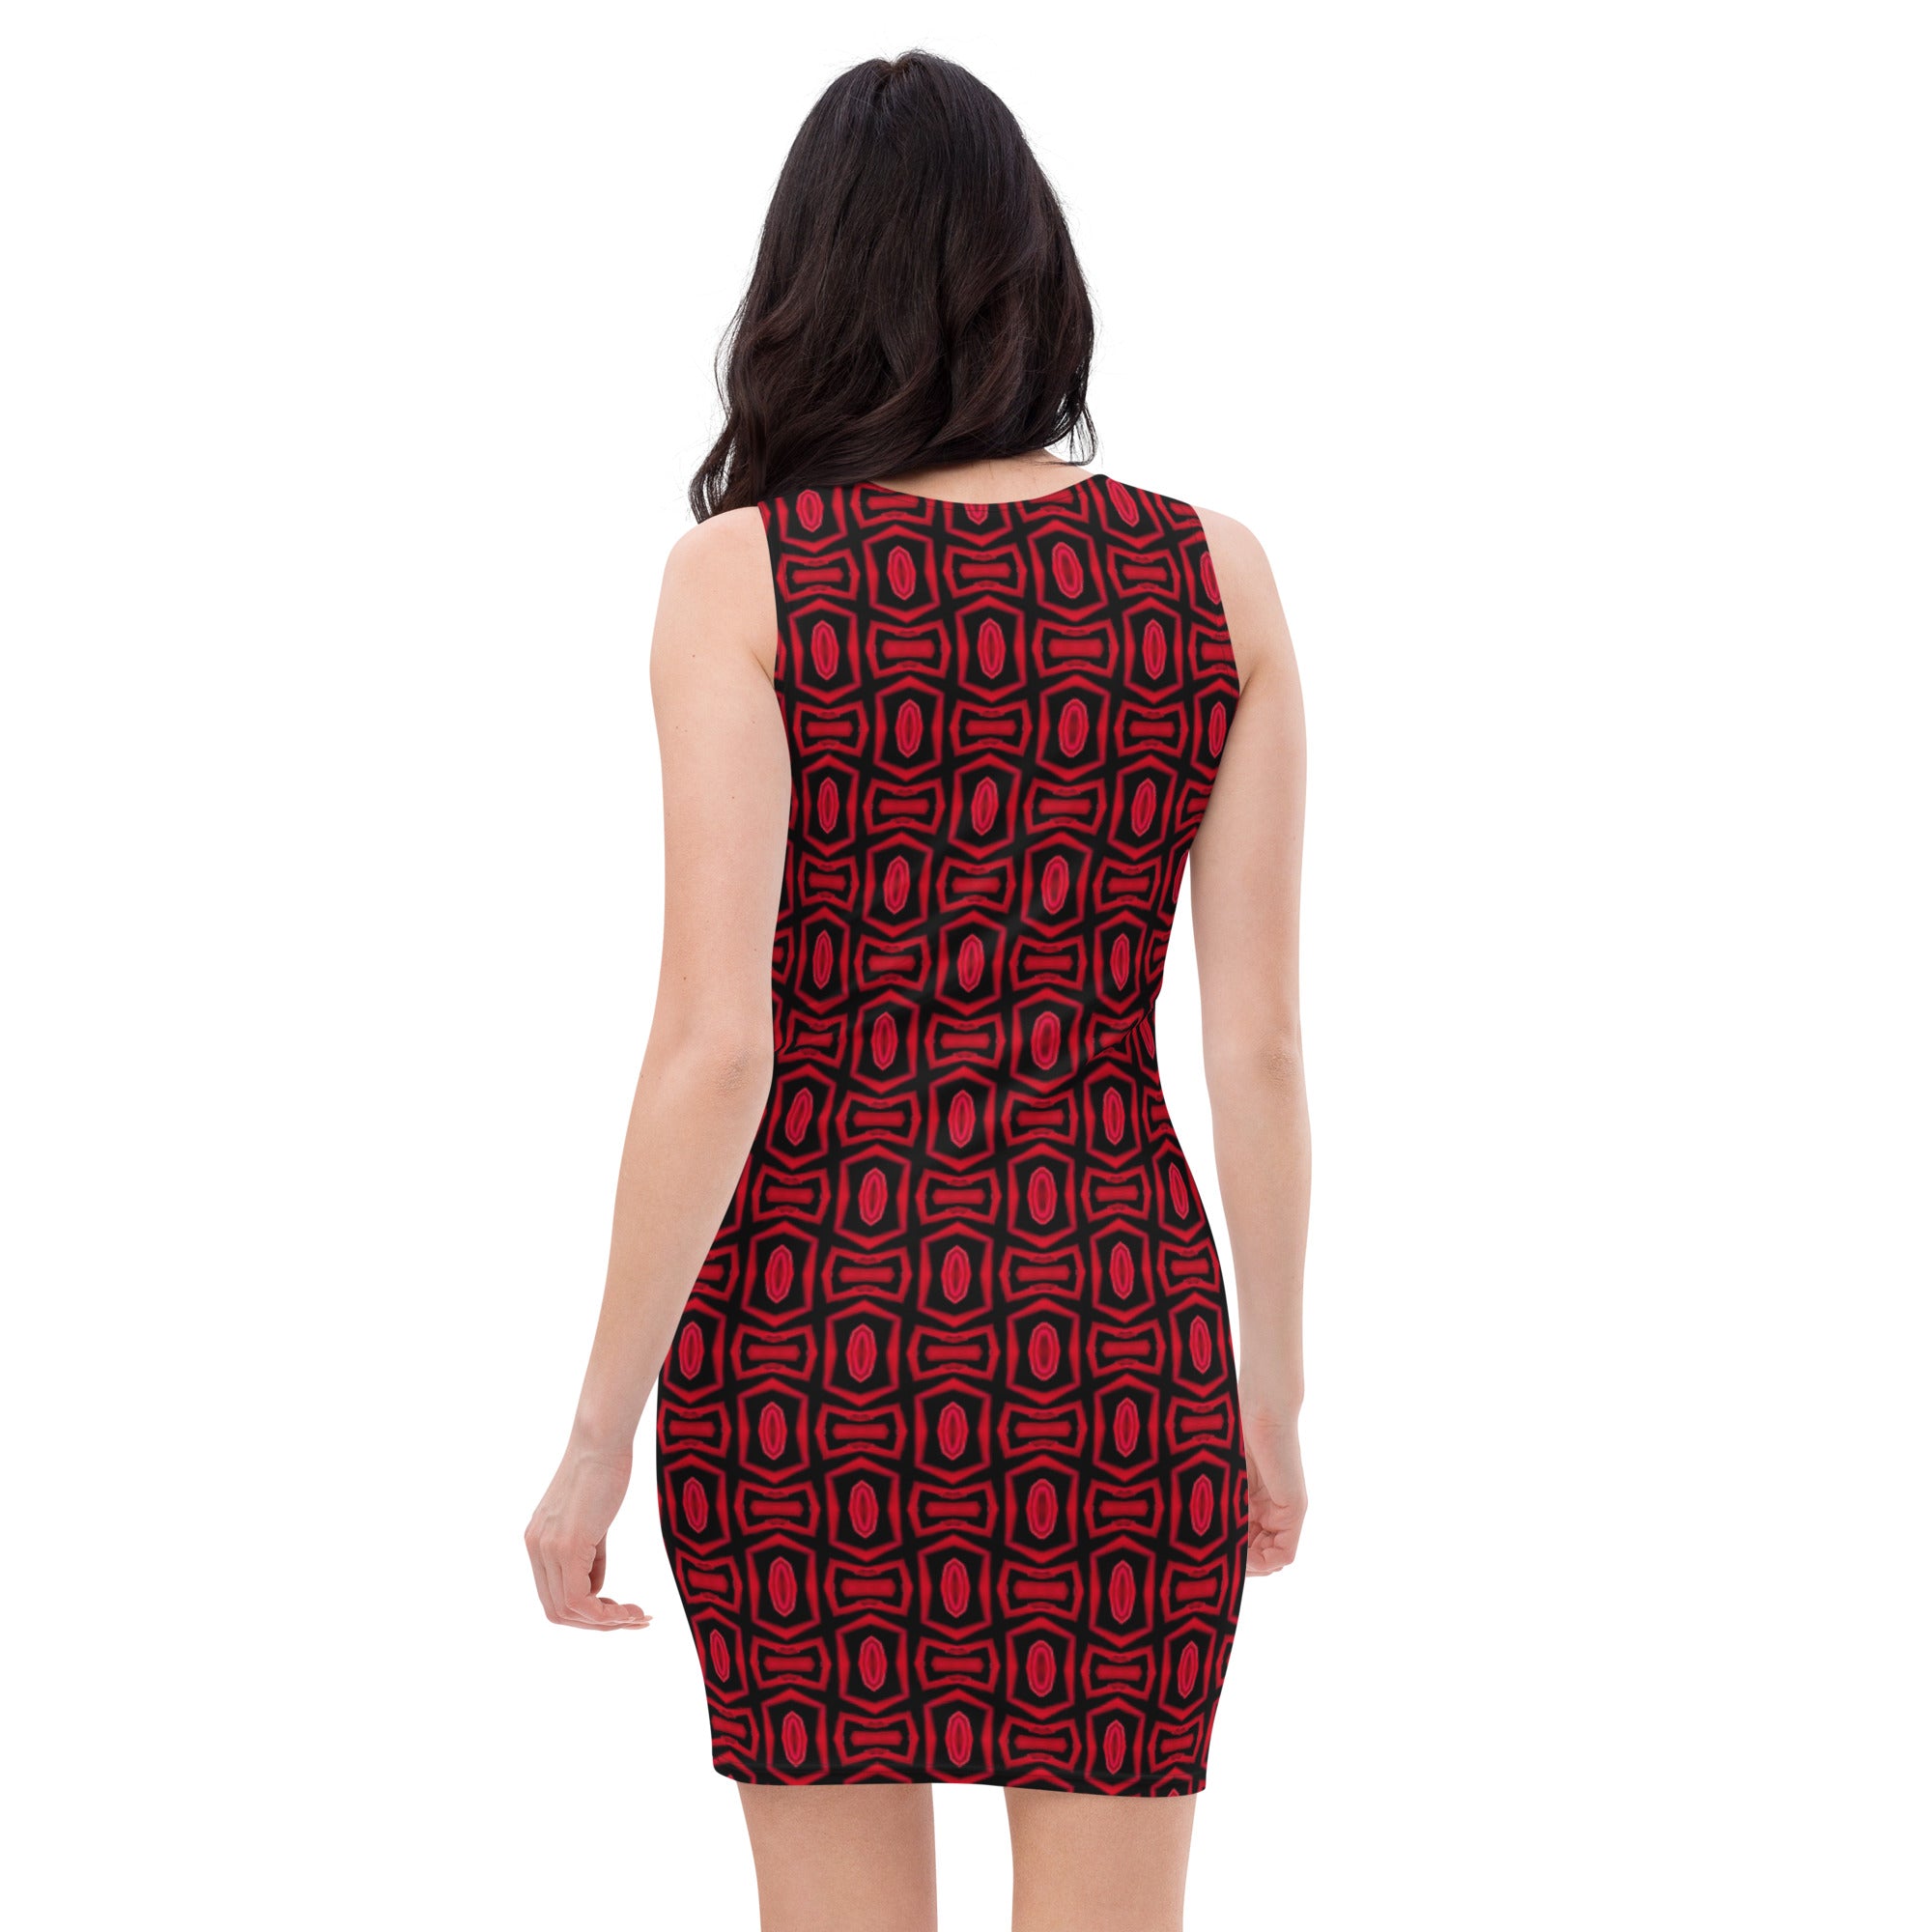 Red and Black Vintage Figure Hugging Sublimation Cut & Sew Dress, by Sensus Studio Design